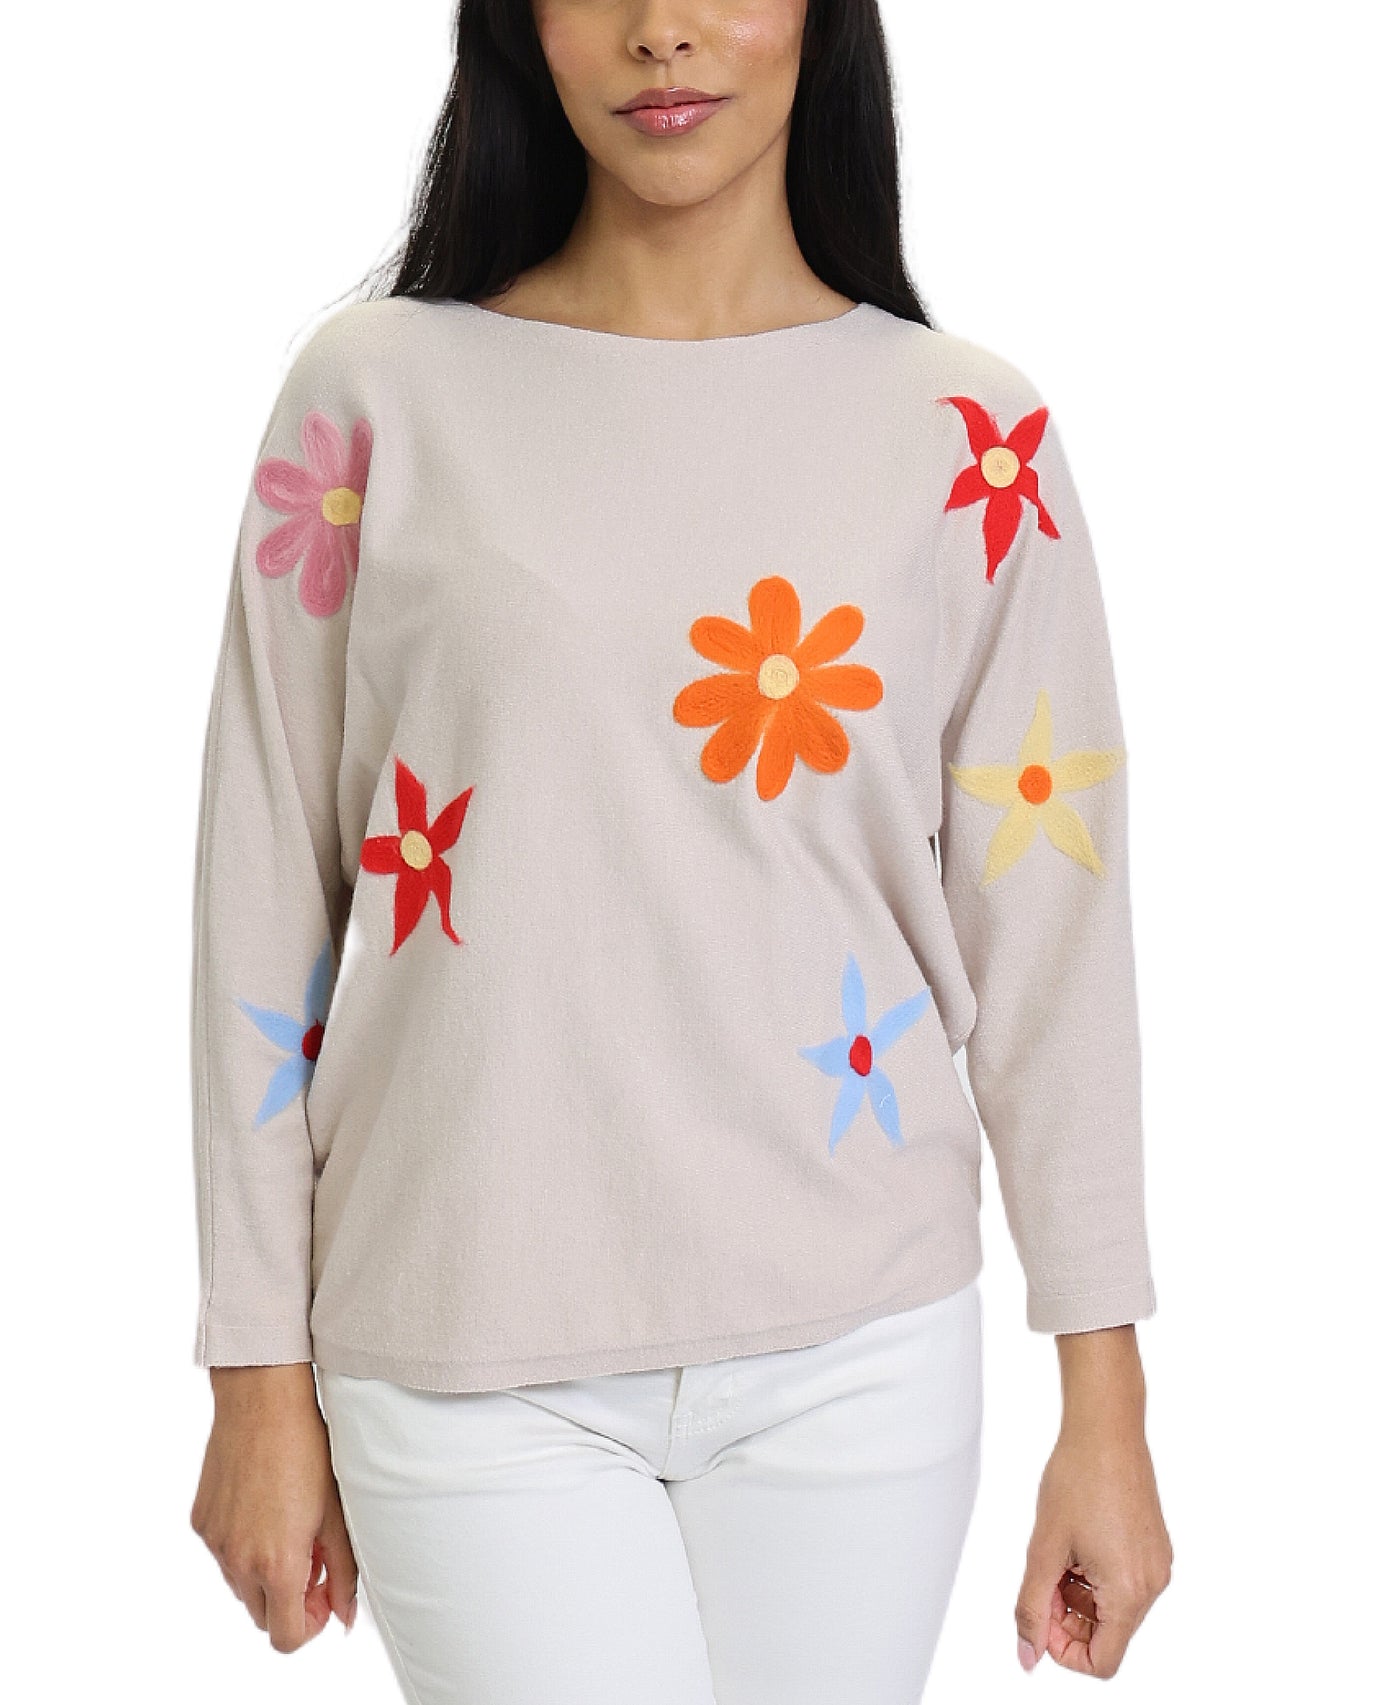 Sweater w/ Flowers image 1